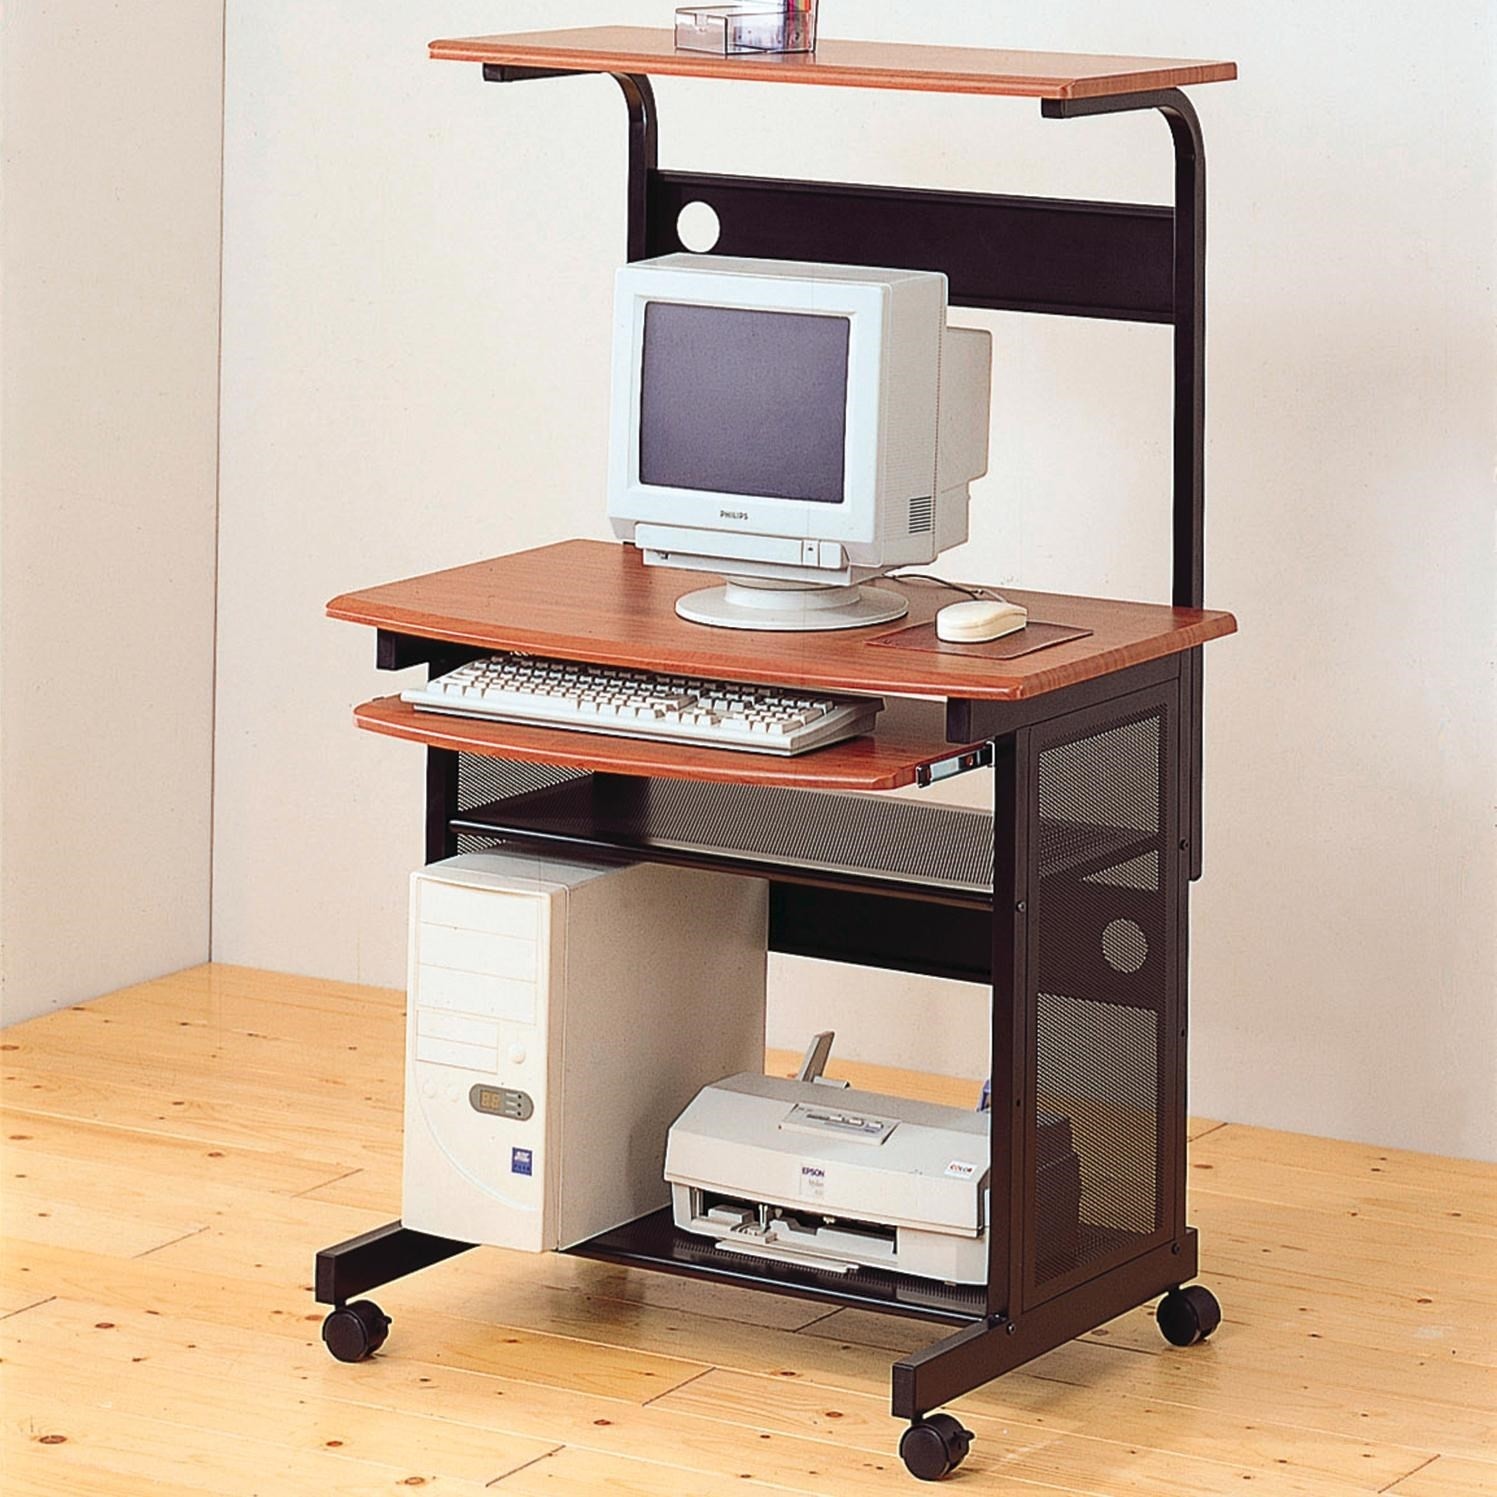 Coaster Computer Desk/Workstation with Sliding Keyboard Tray, Walnut/Black Finish